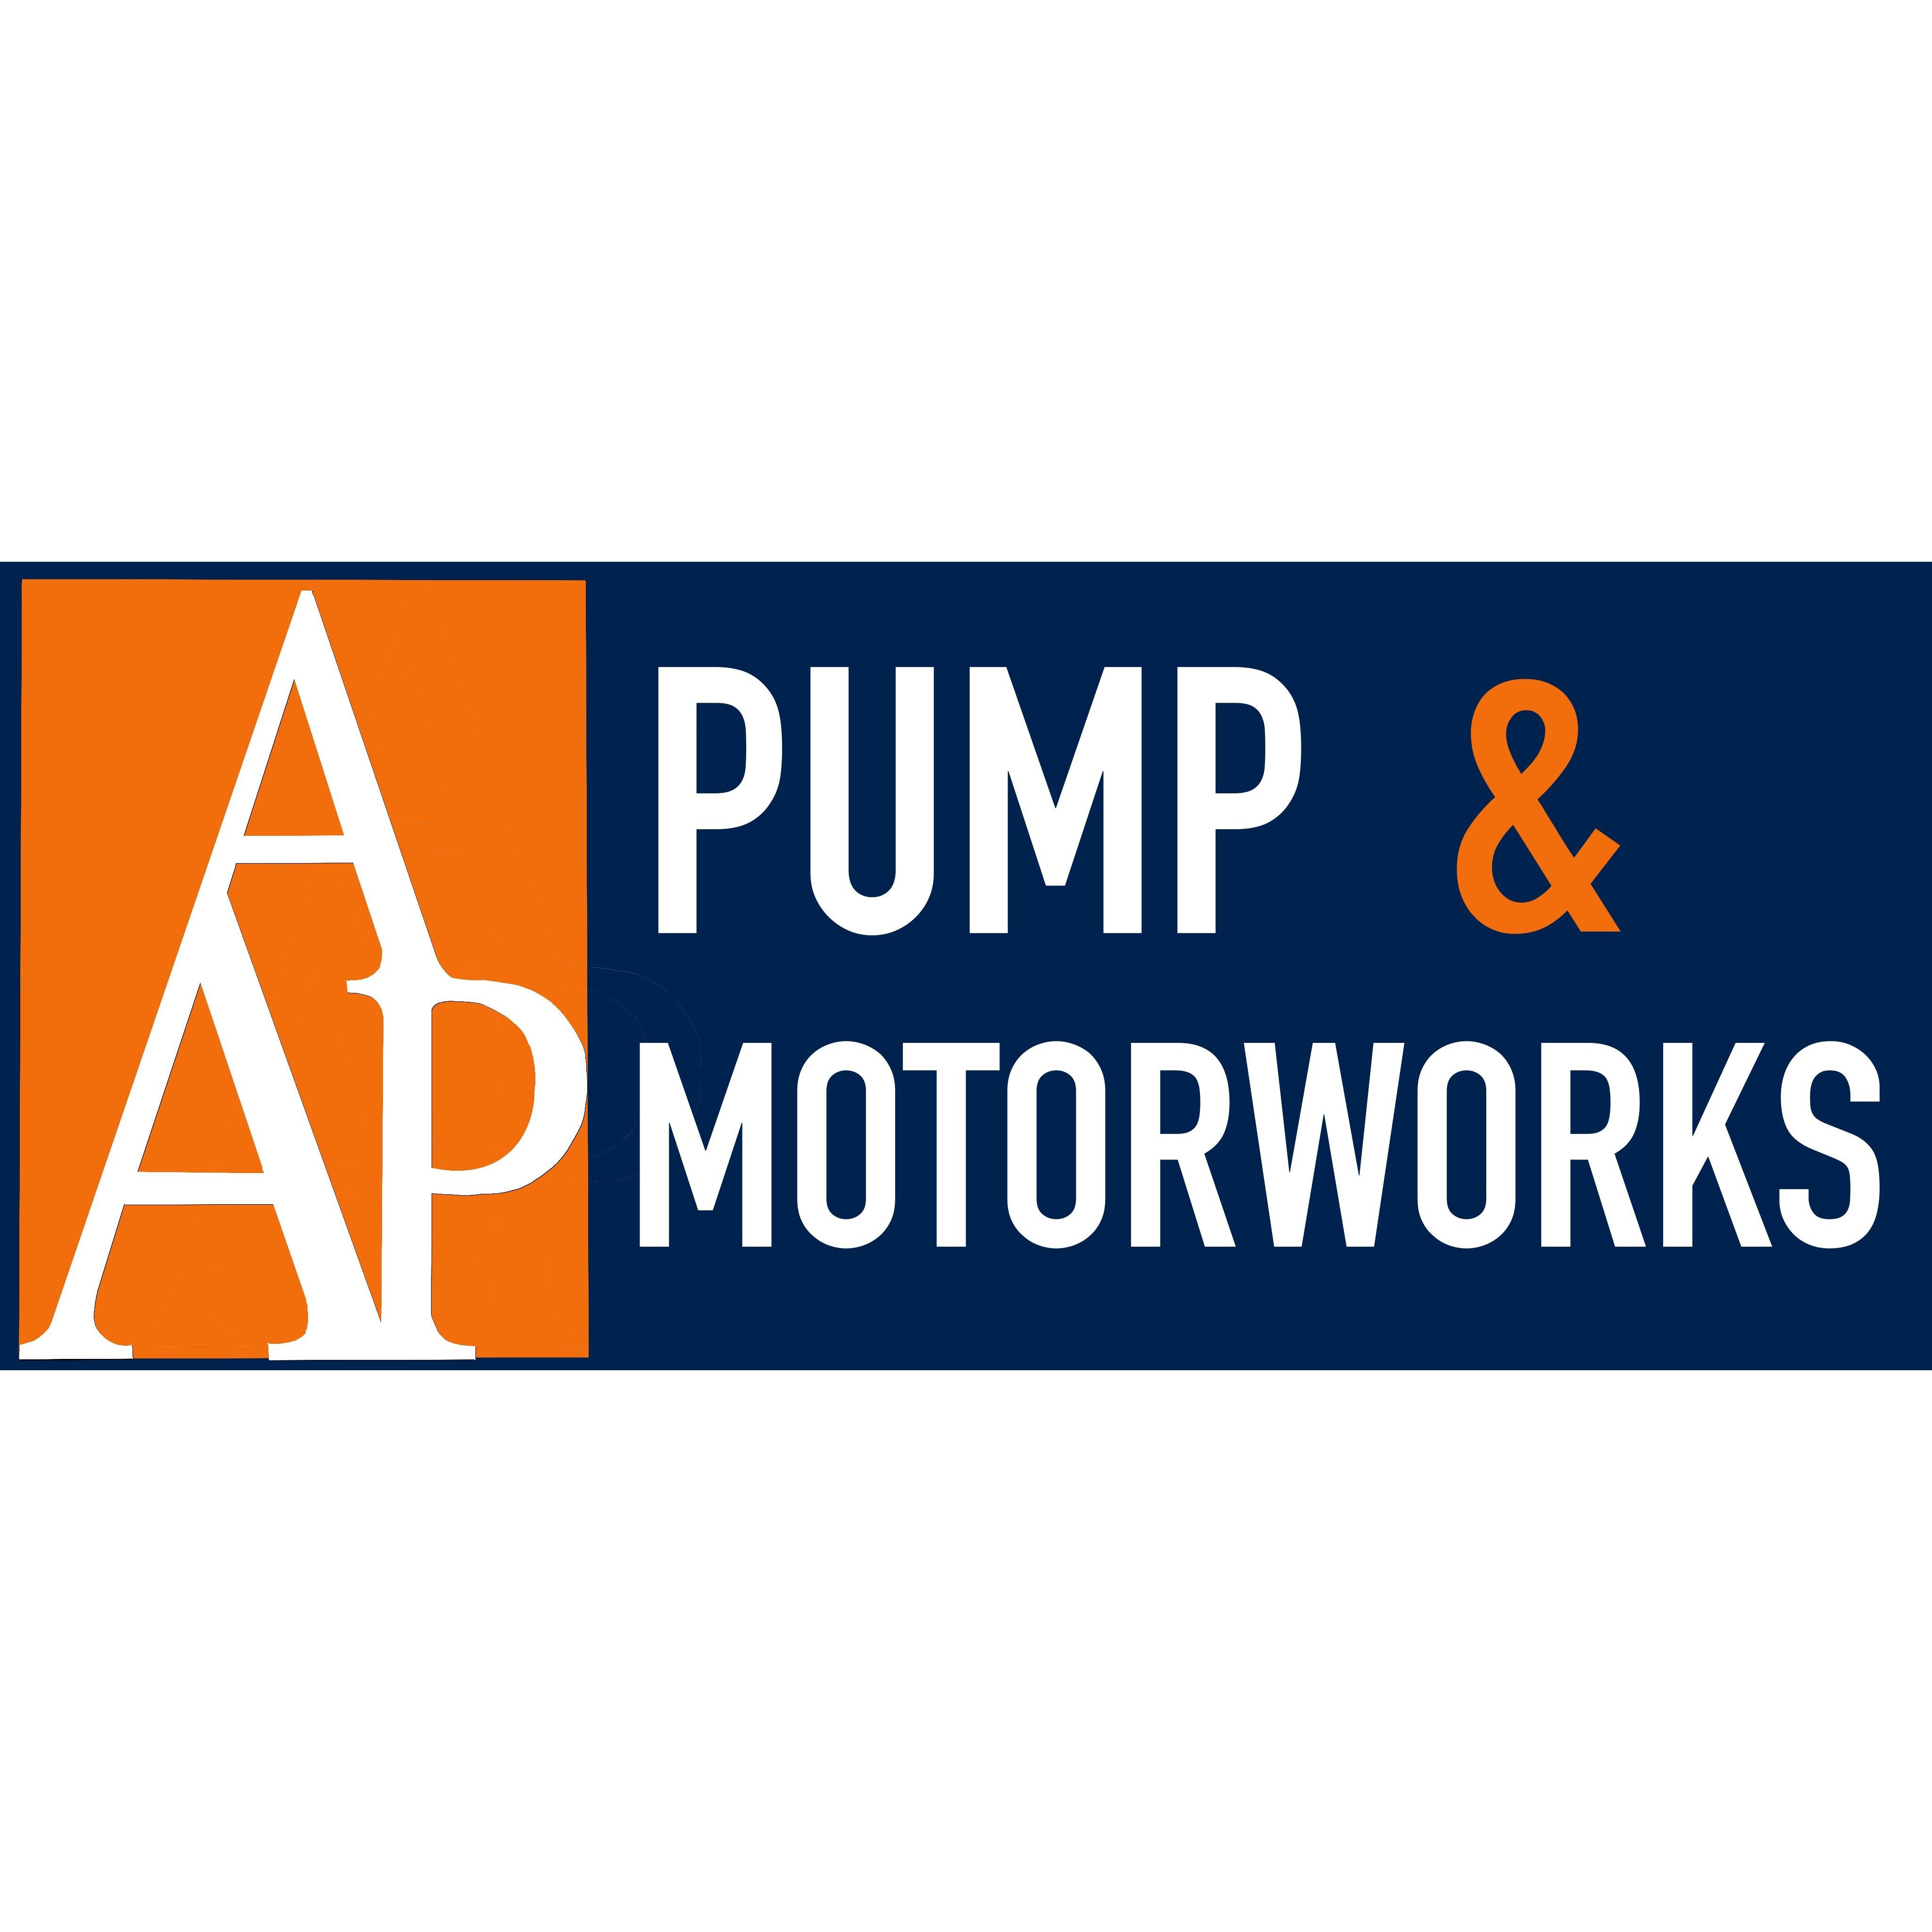 AAP Pump & Motorworks - Sarasota, FL 34240 - (941)377-4373 | ShowMeLocal.com